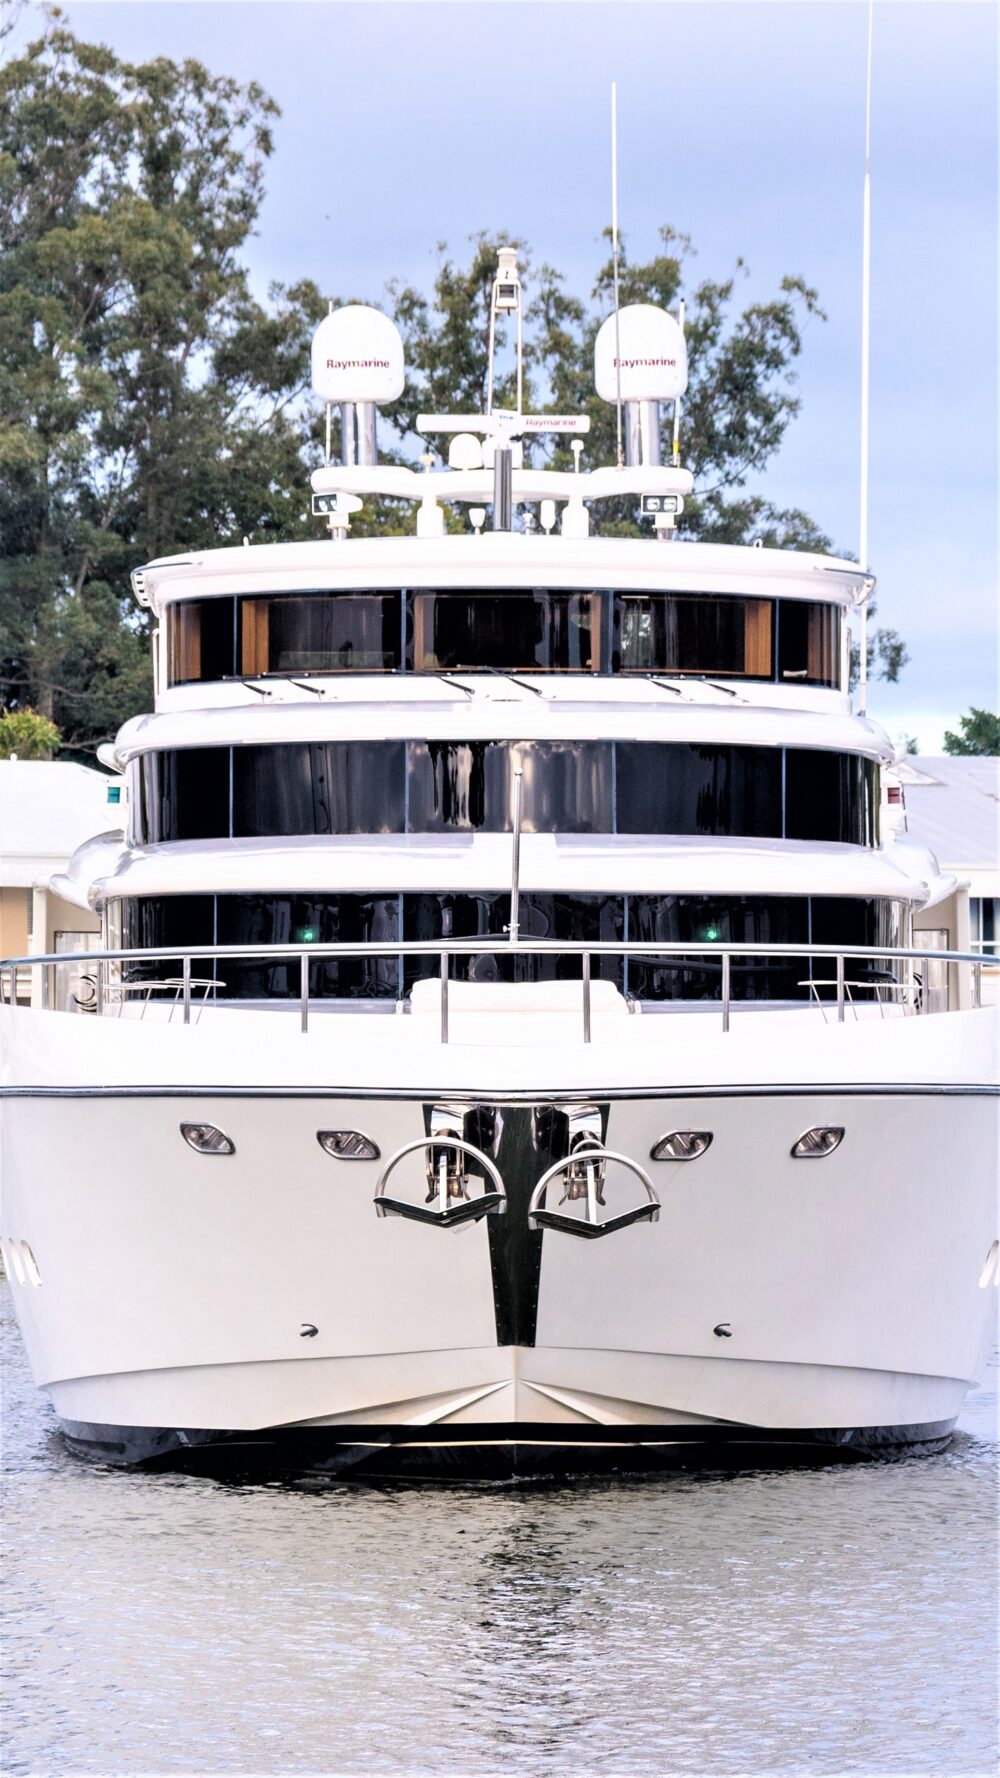 rhapsody 2 yacht owner